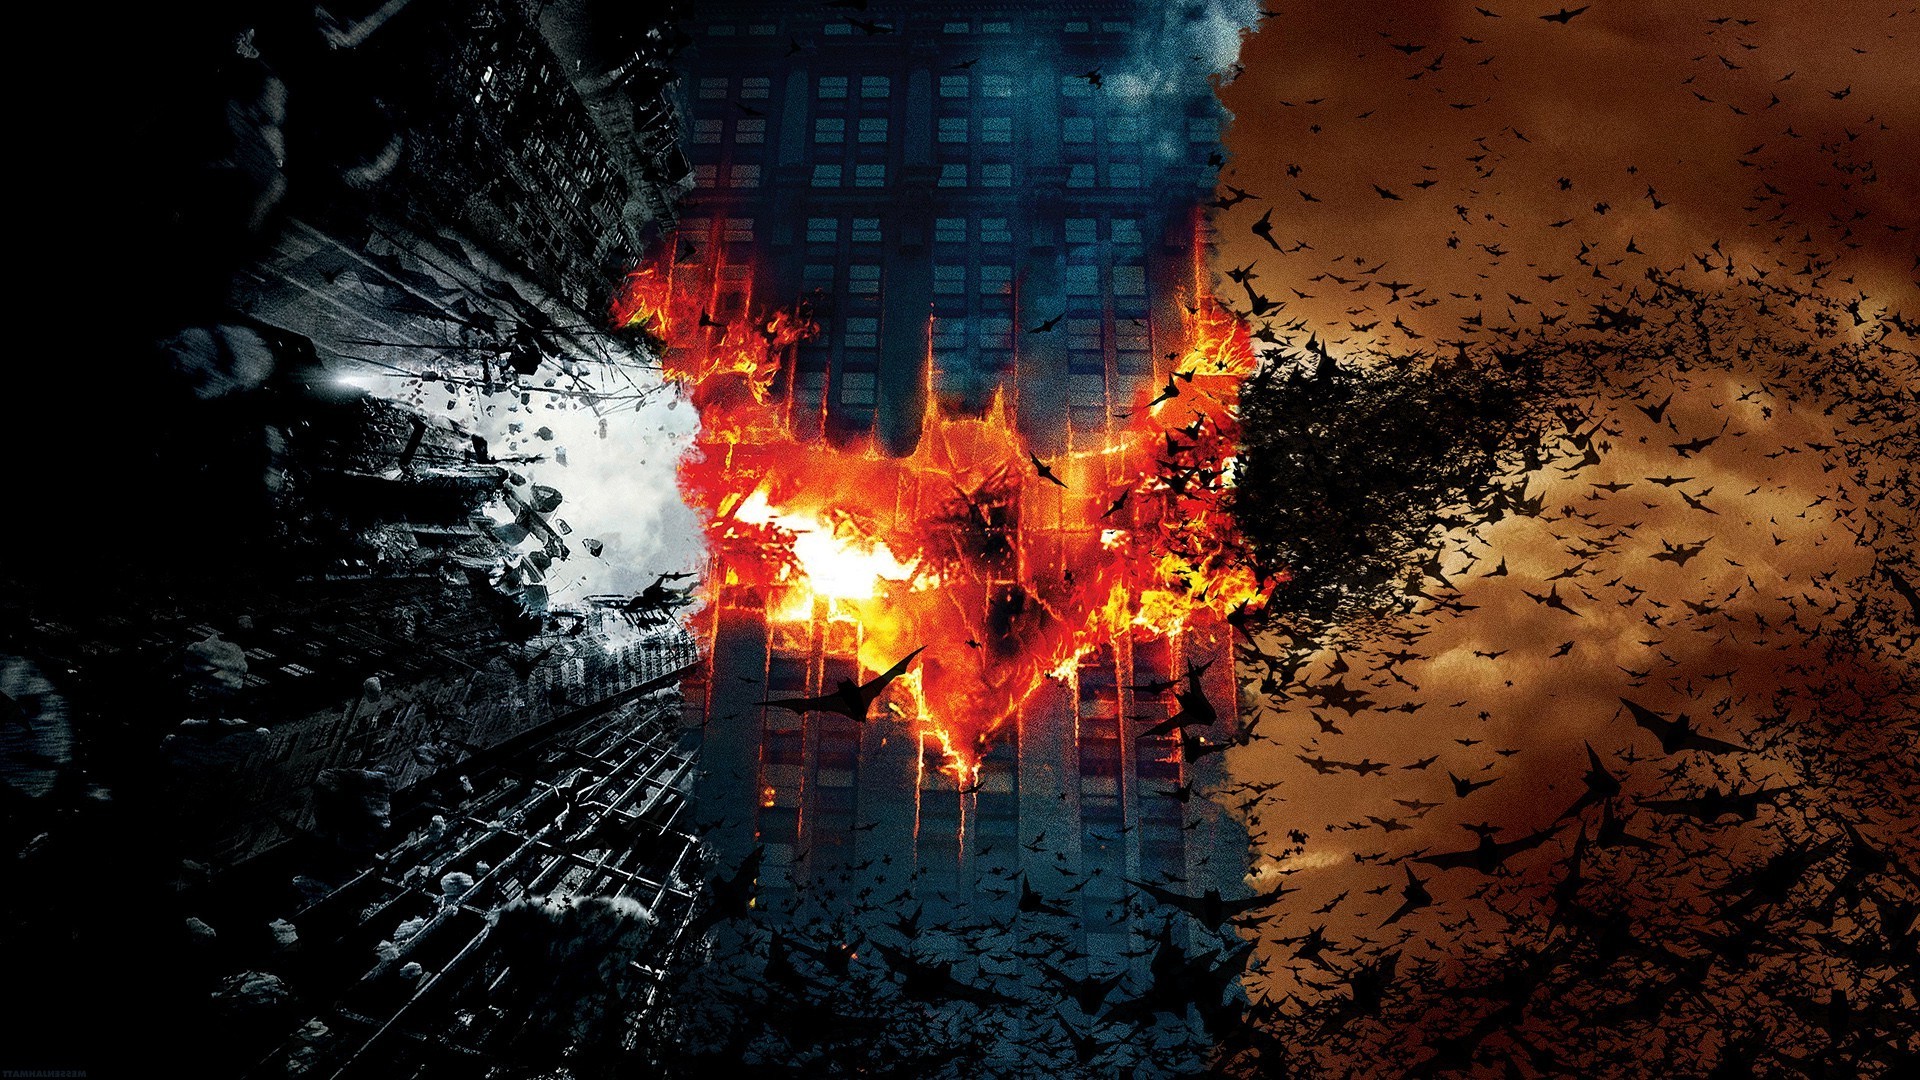 39+] The Dark Knight Movie Desktop Wallpapers - WallpaperSafari